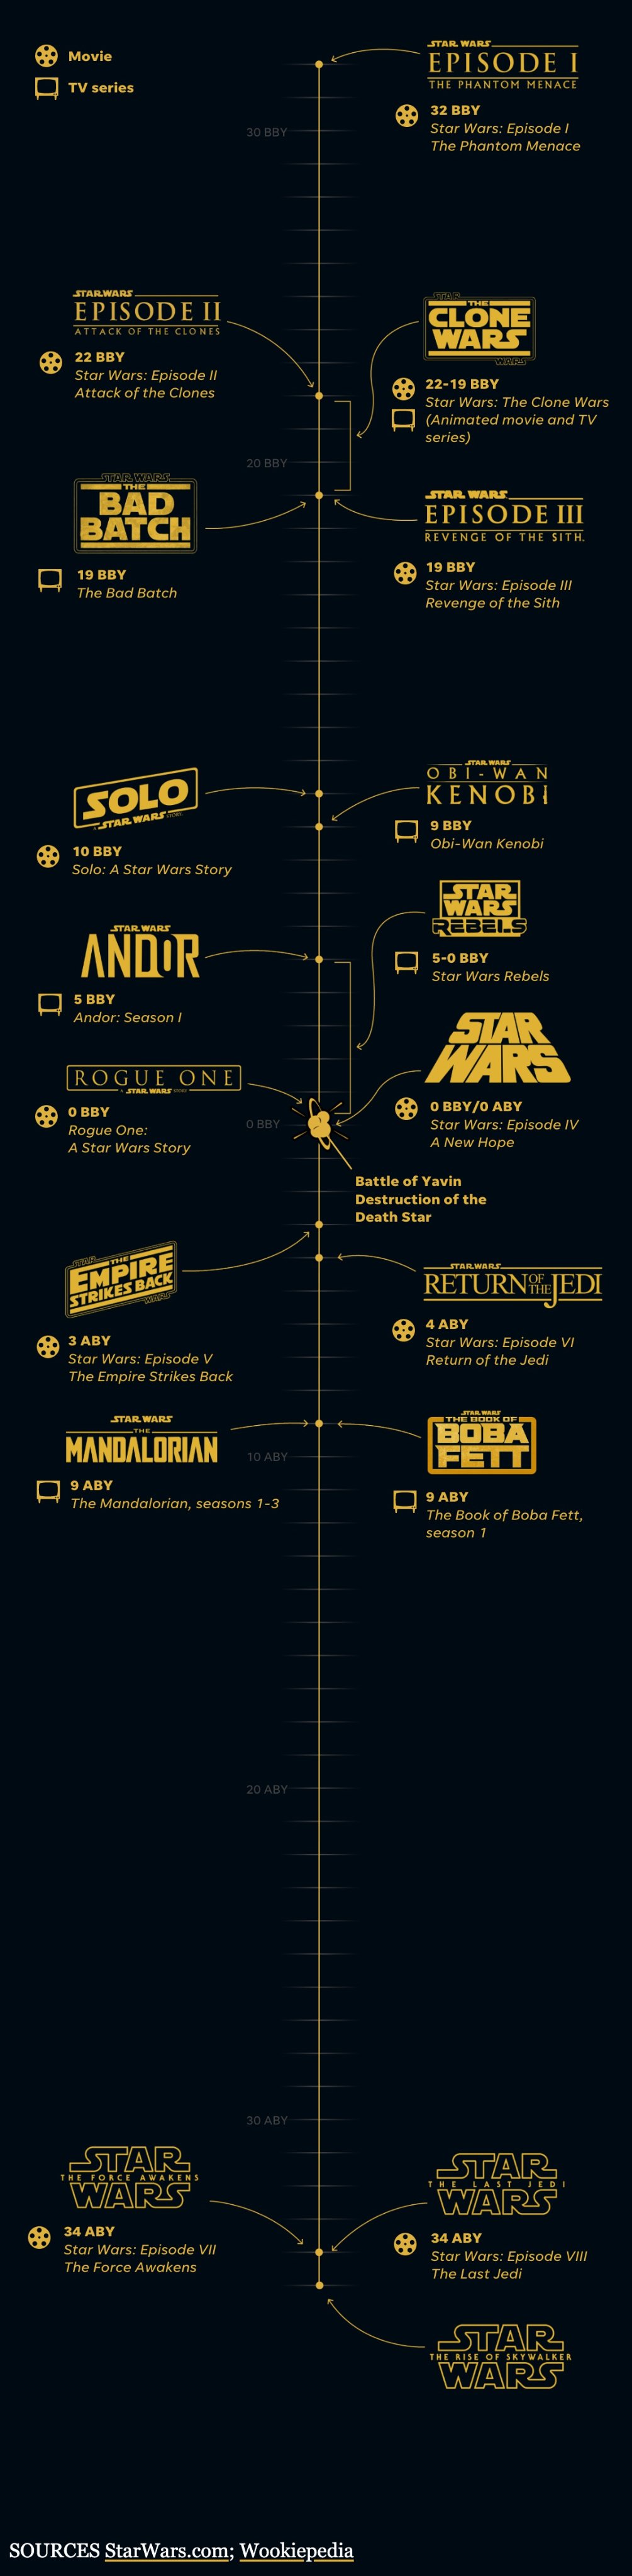 When Is 'The Mandalorian' Set? Star Wars Timeline